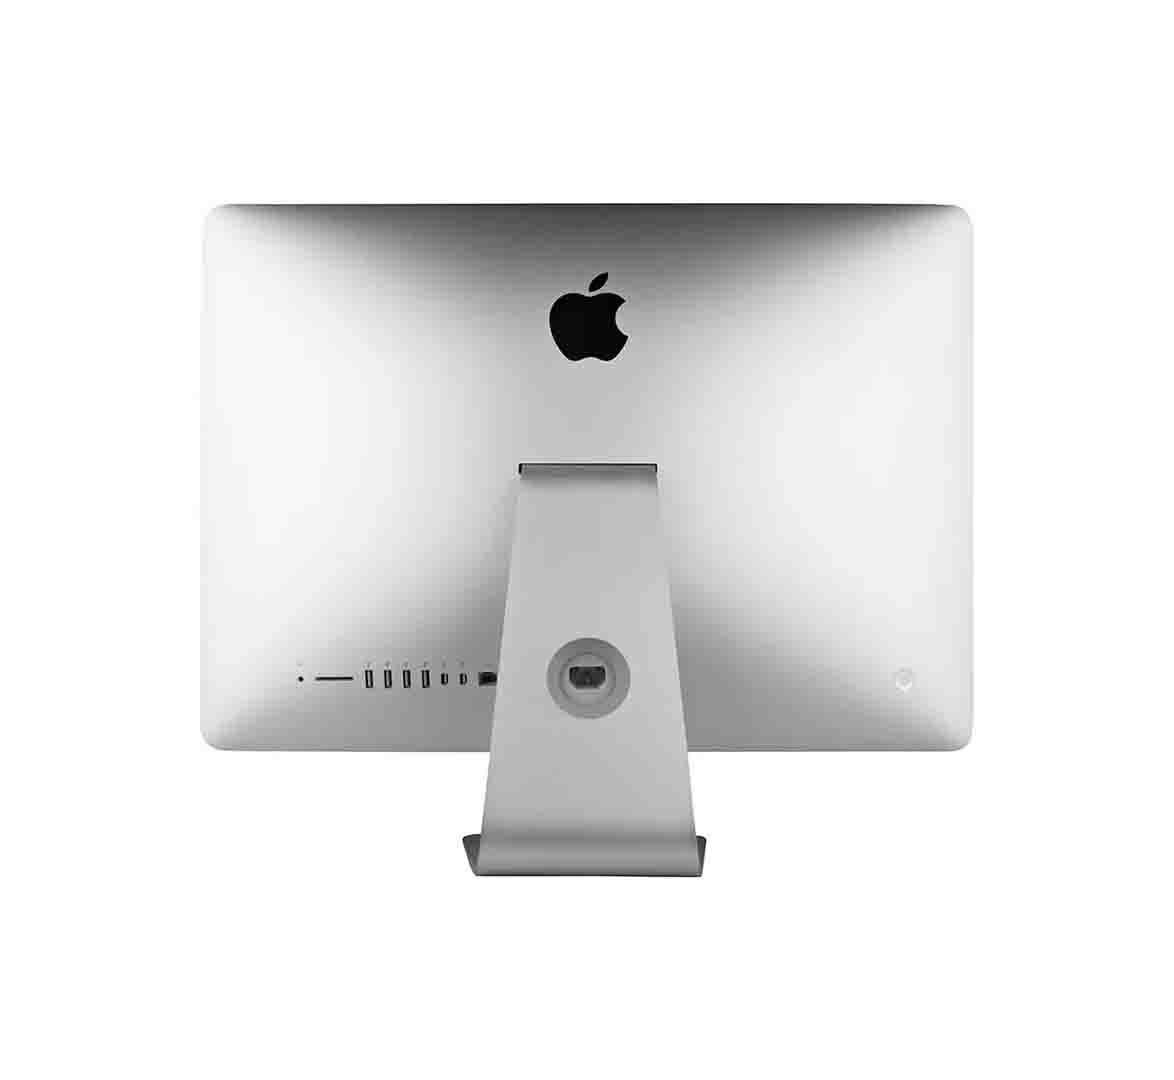 Apple iMac A1311, Intel Core i5-2nd Generation CPU, 4GB RAM, 160GB HDD, AMD RADEON Graphics, 21.5 inch Display